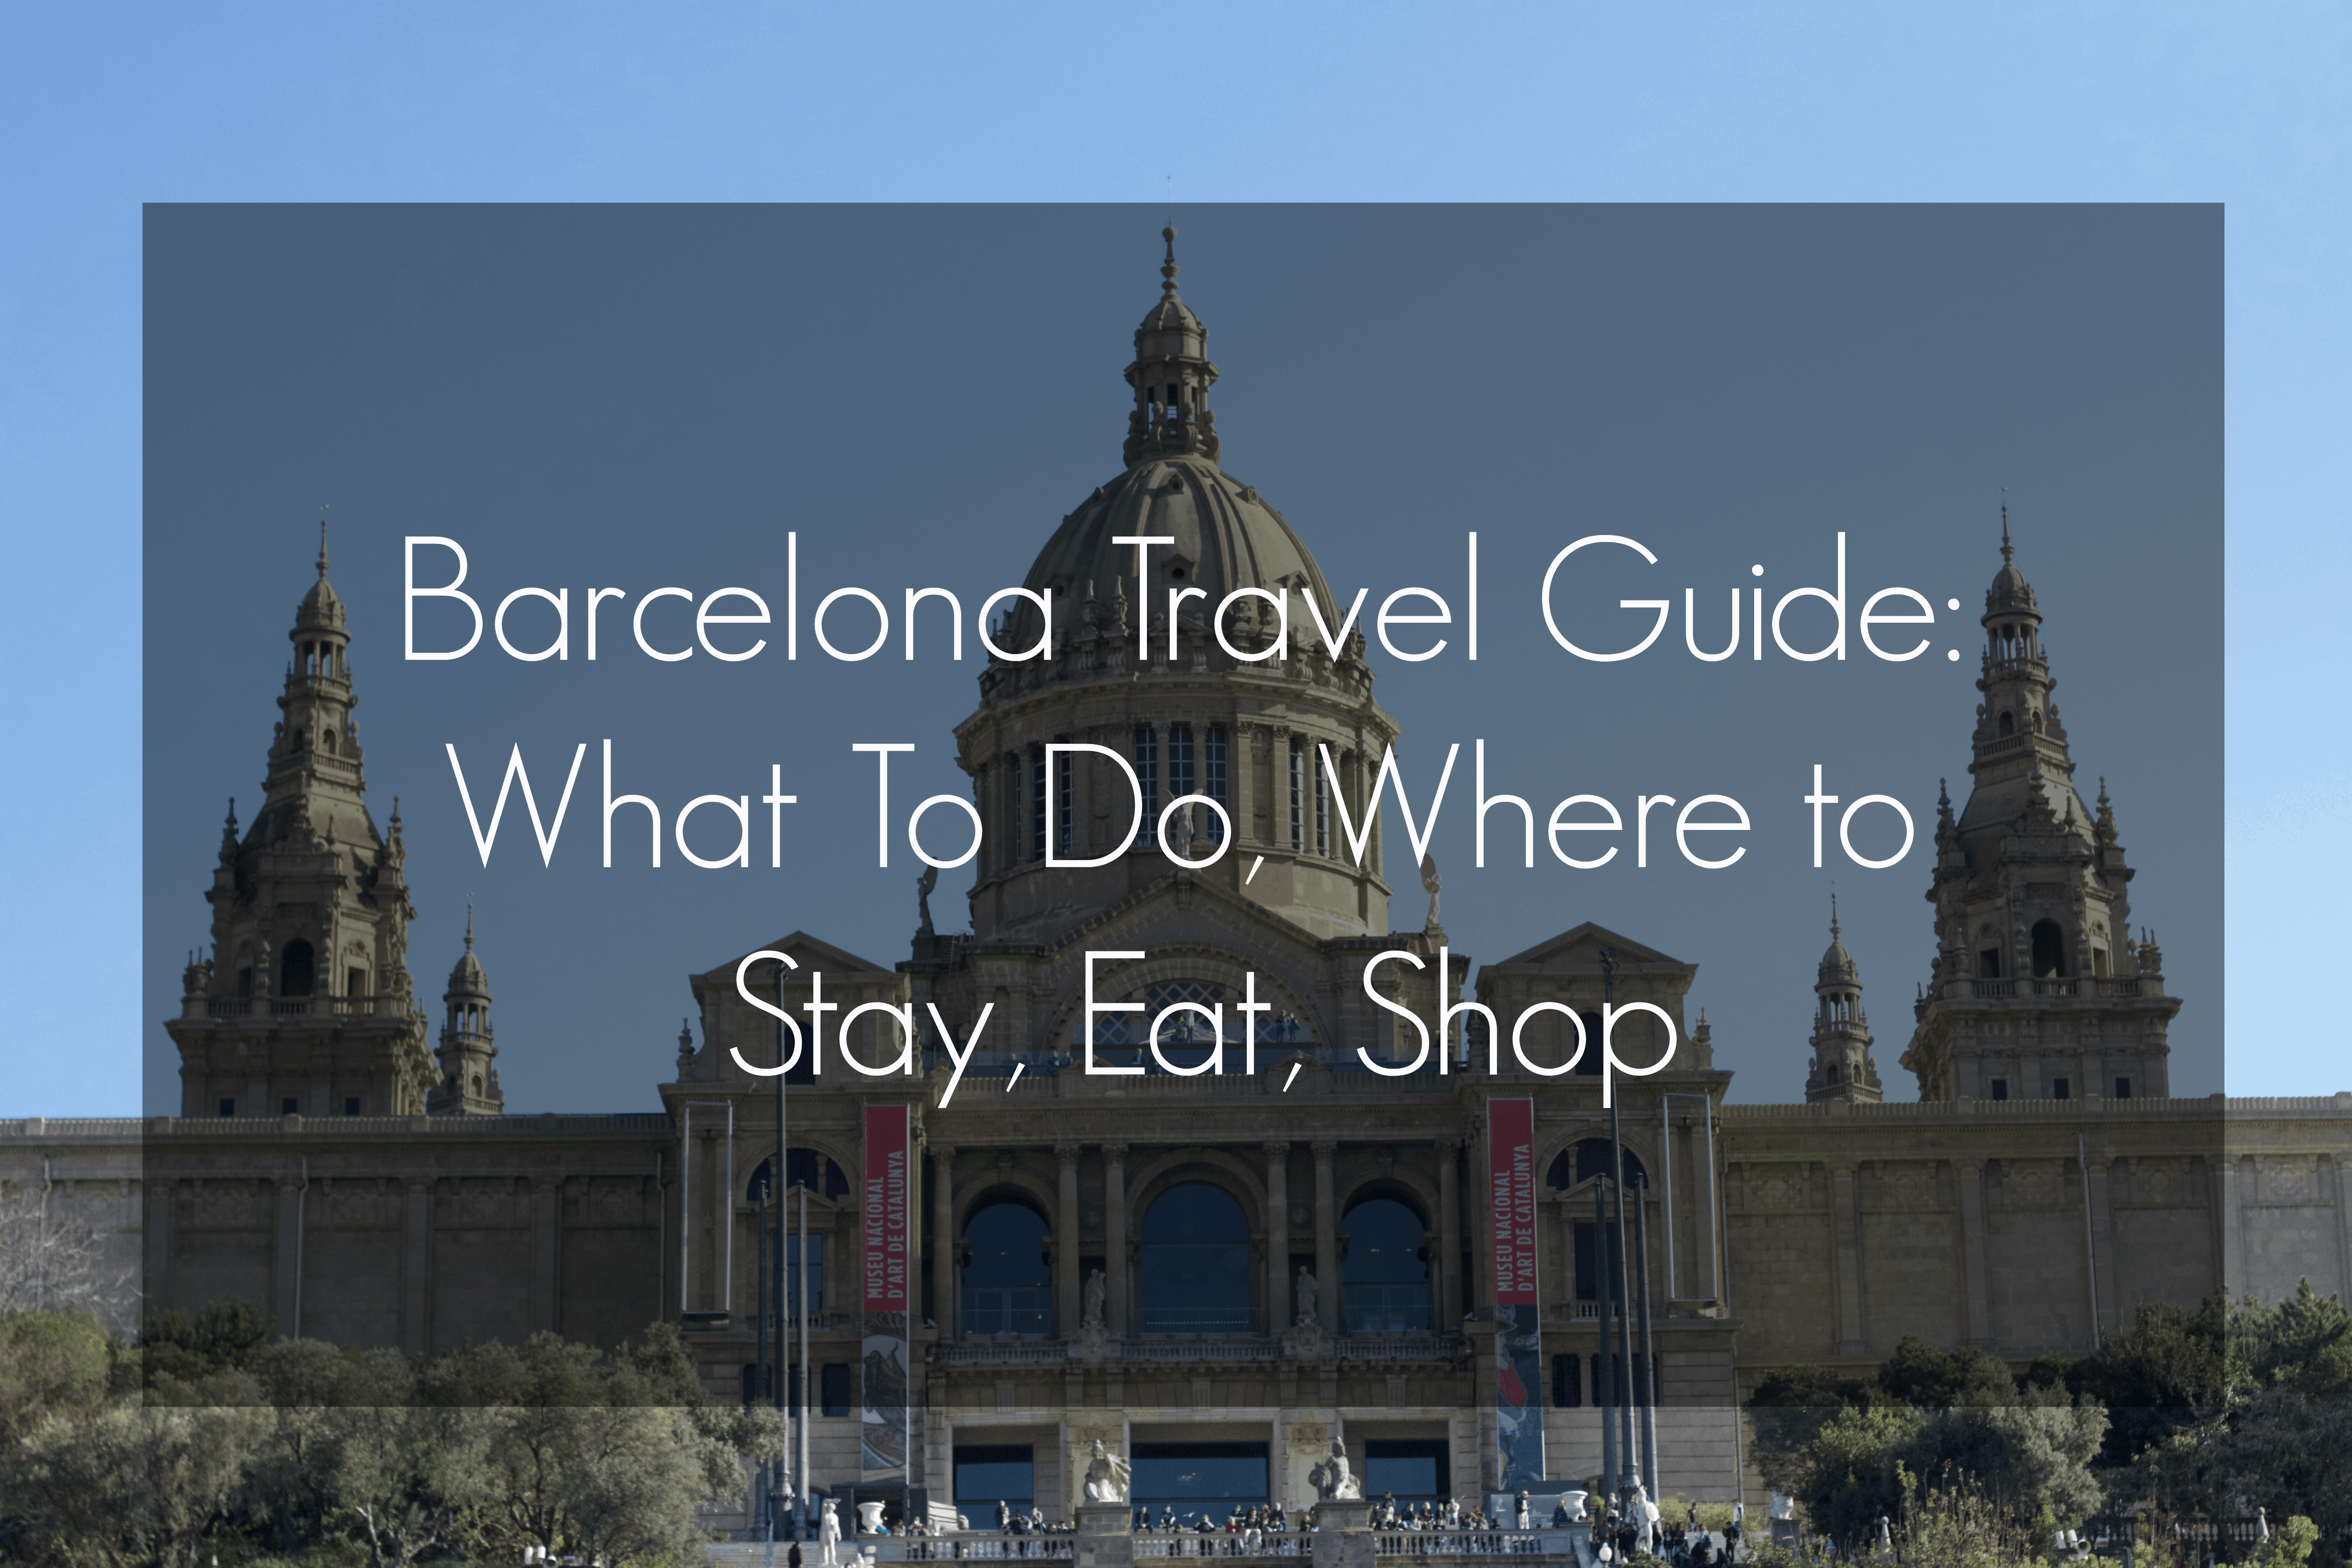 Jordan Taylor C - Barcelona Travel Guide